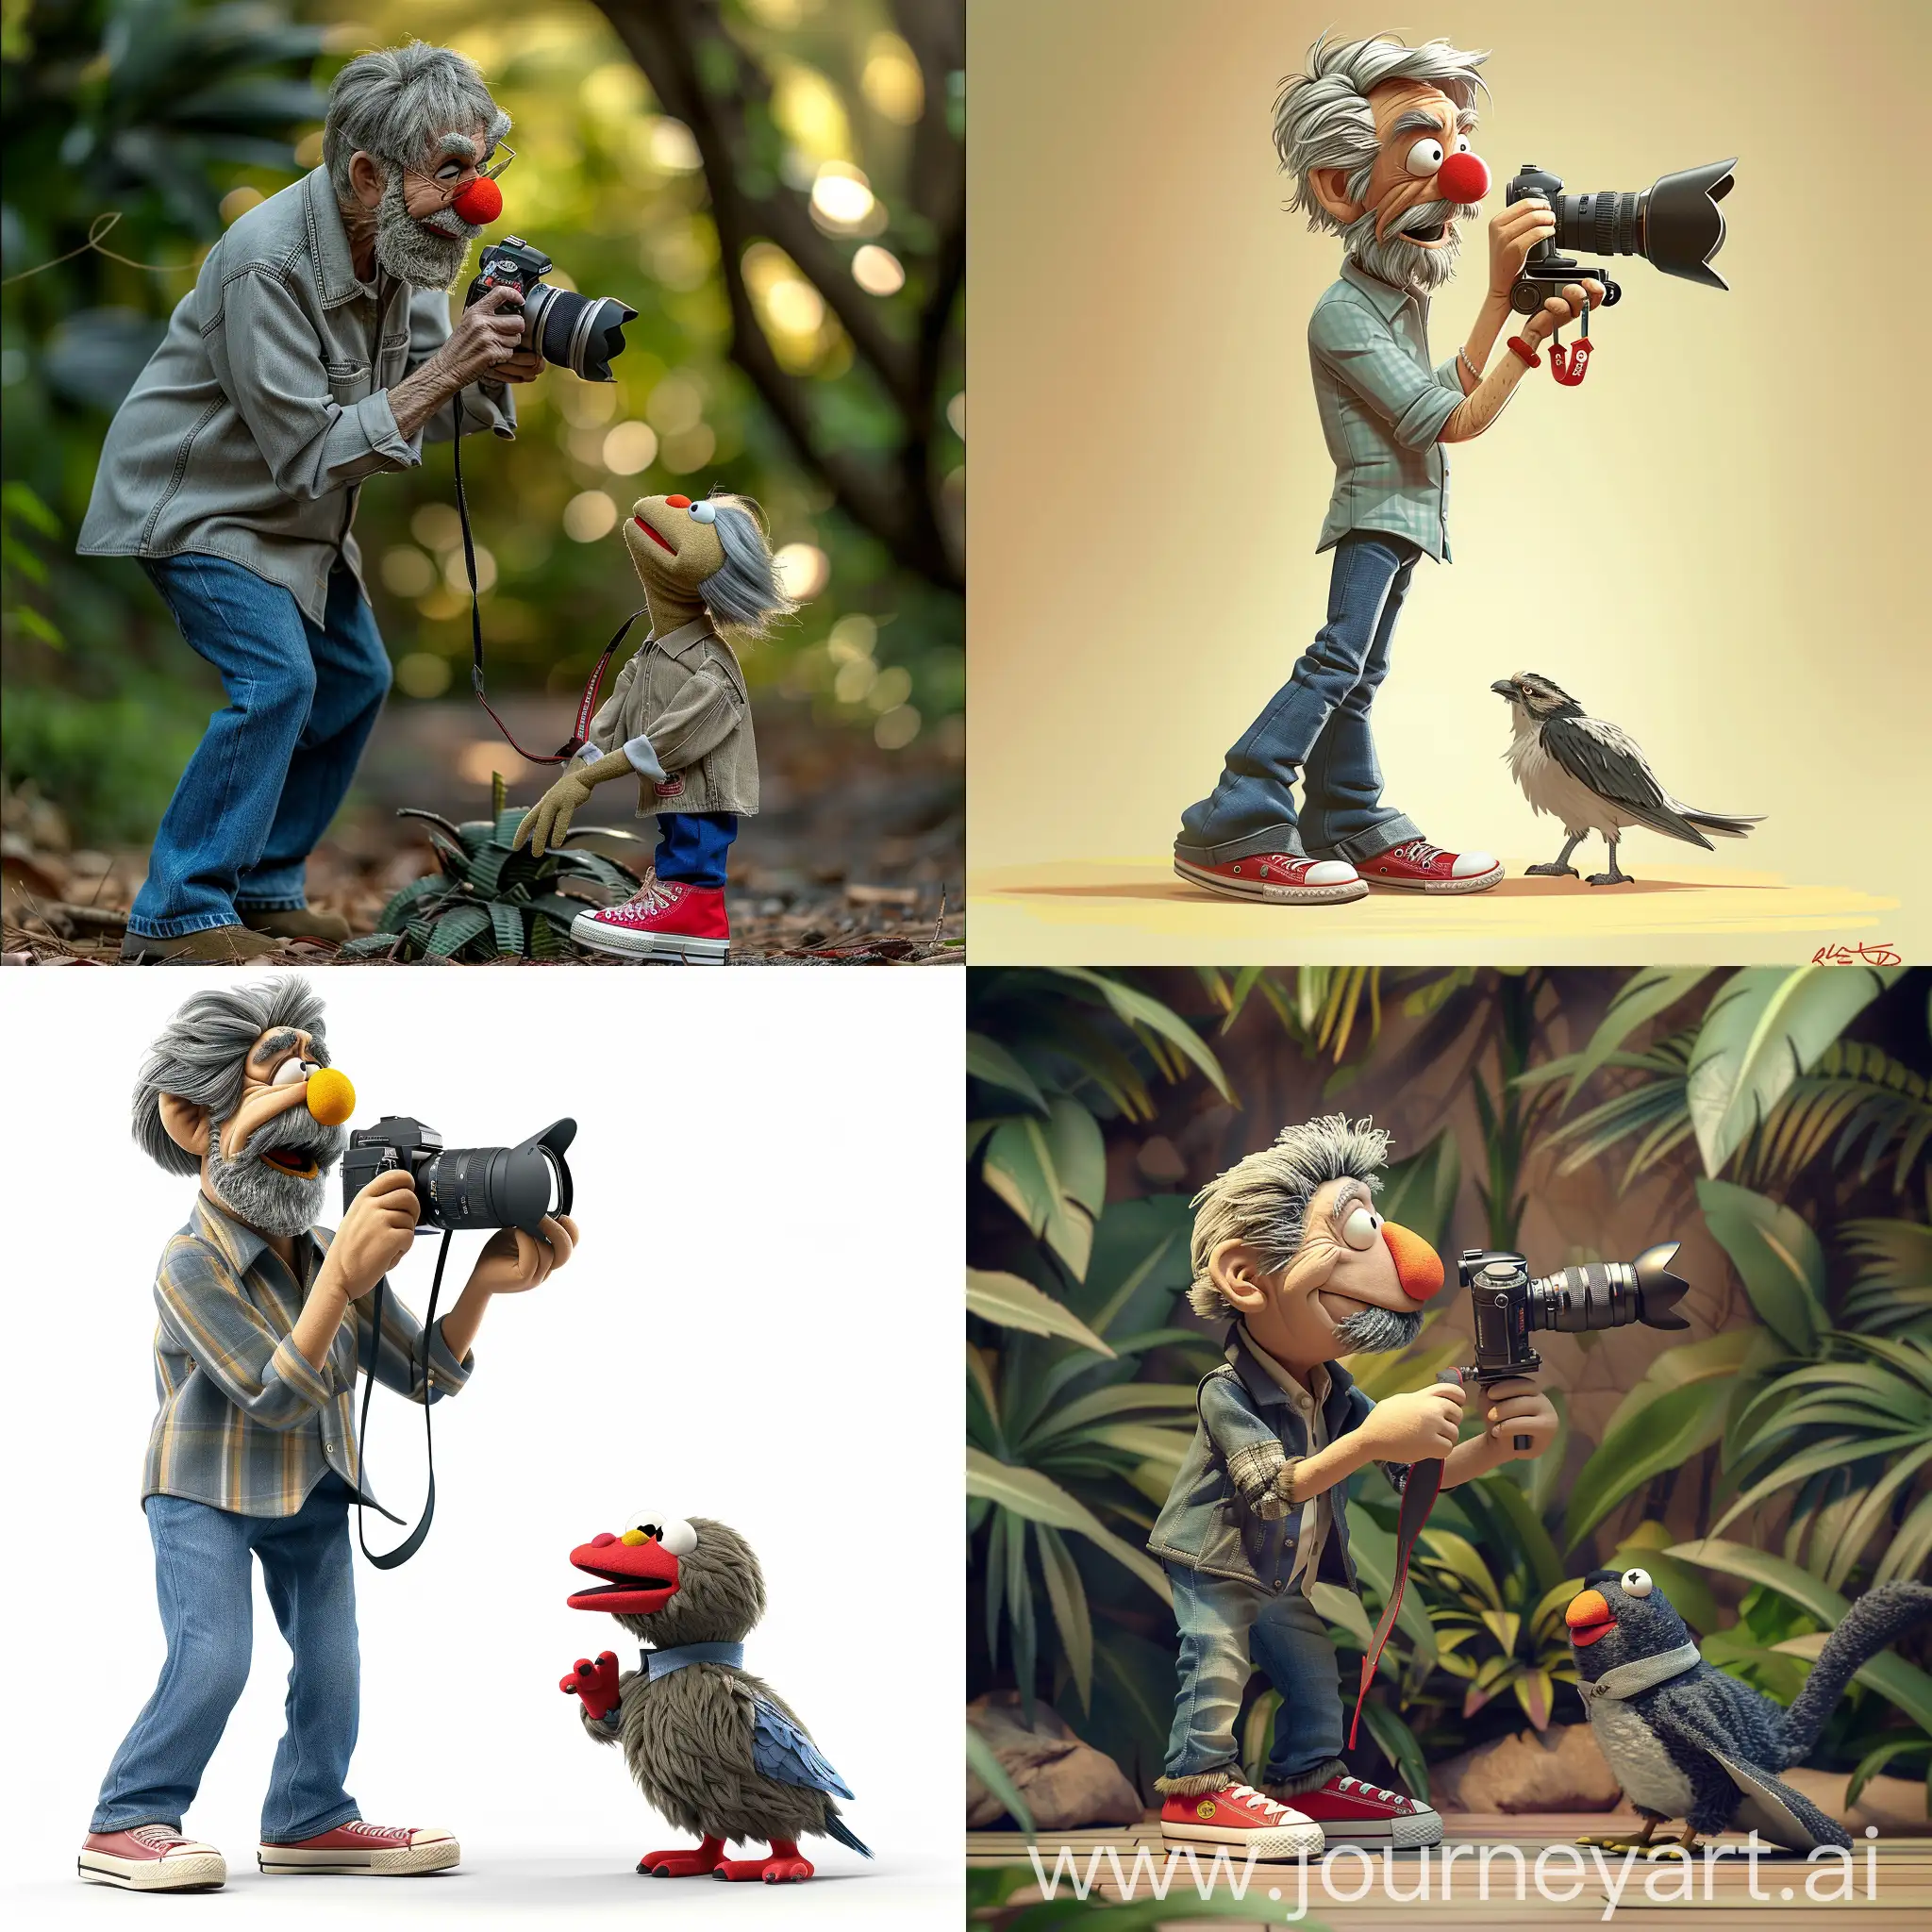 Muppet-Photographer-Capturing-Bird-with-Fancy-Camera